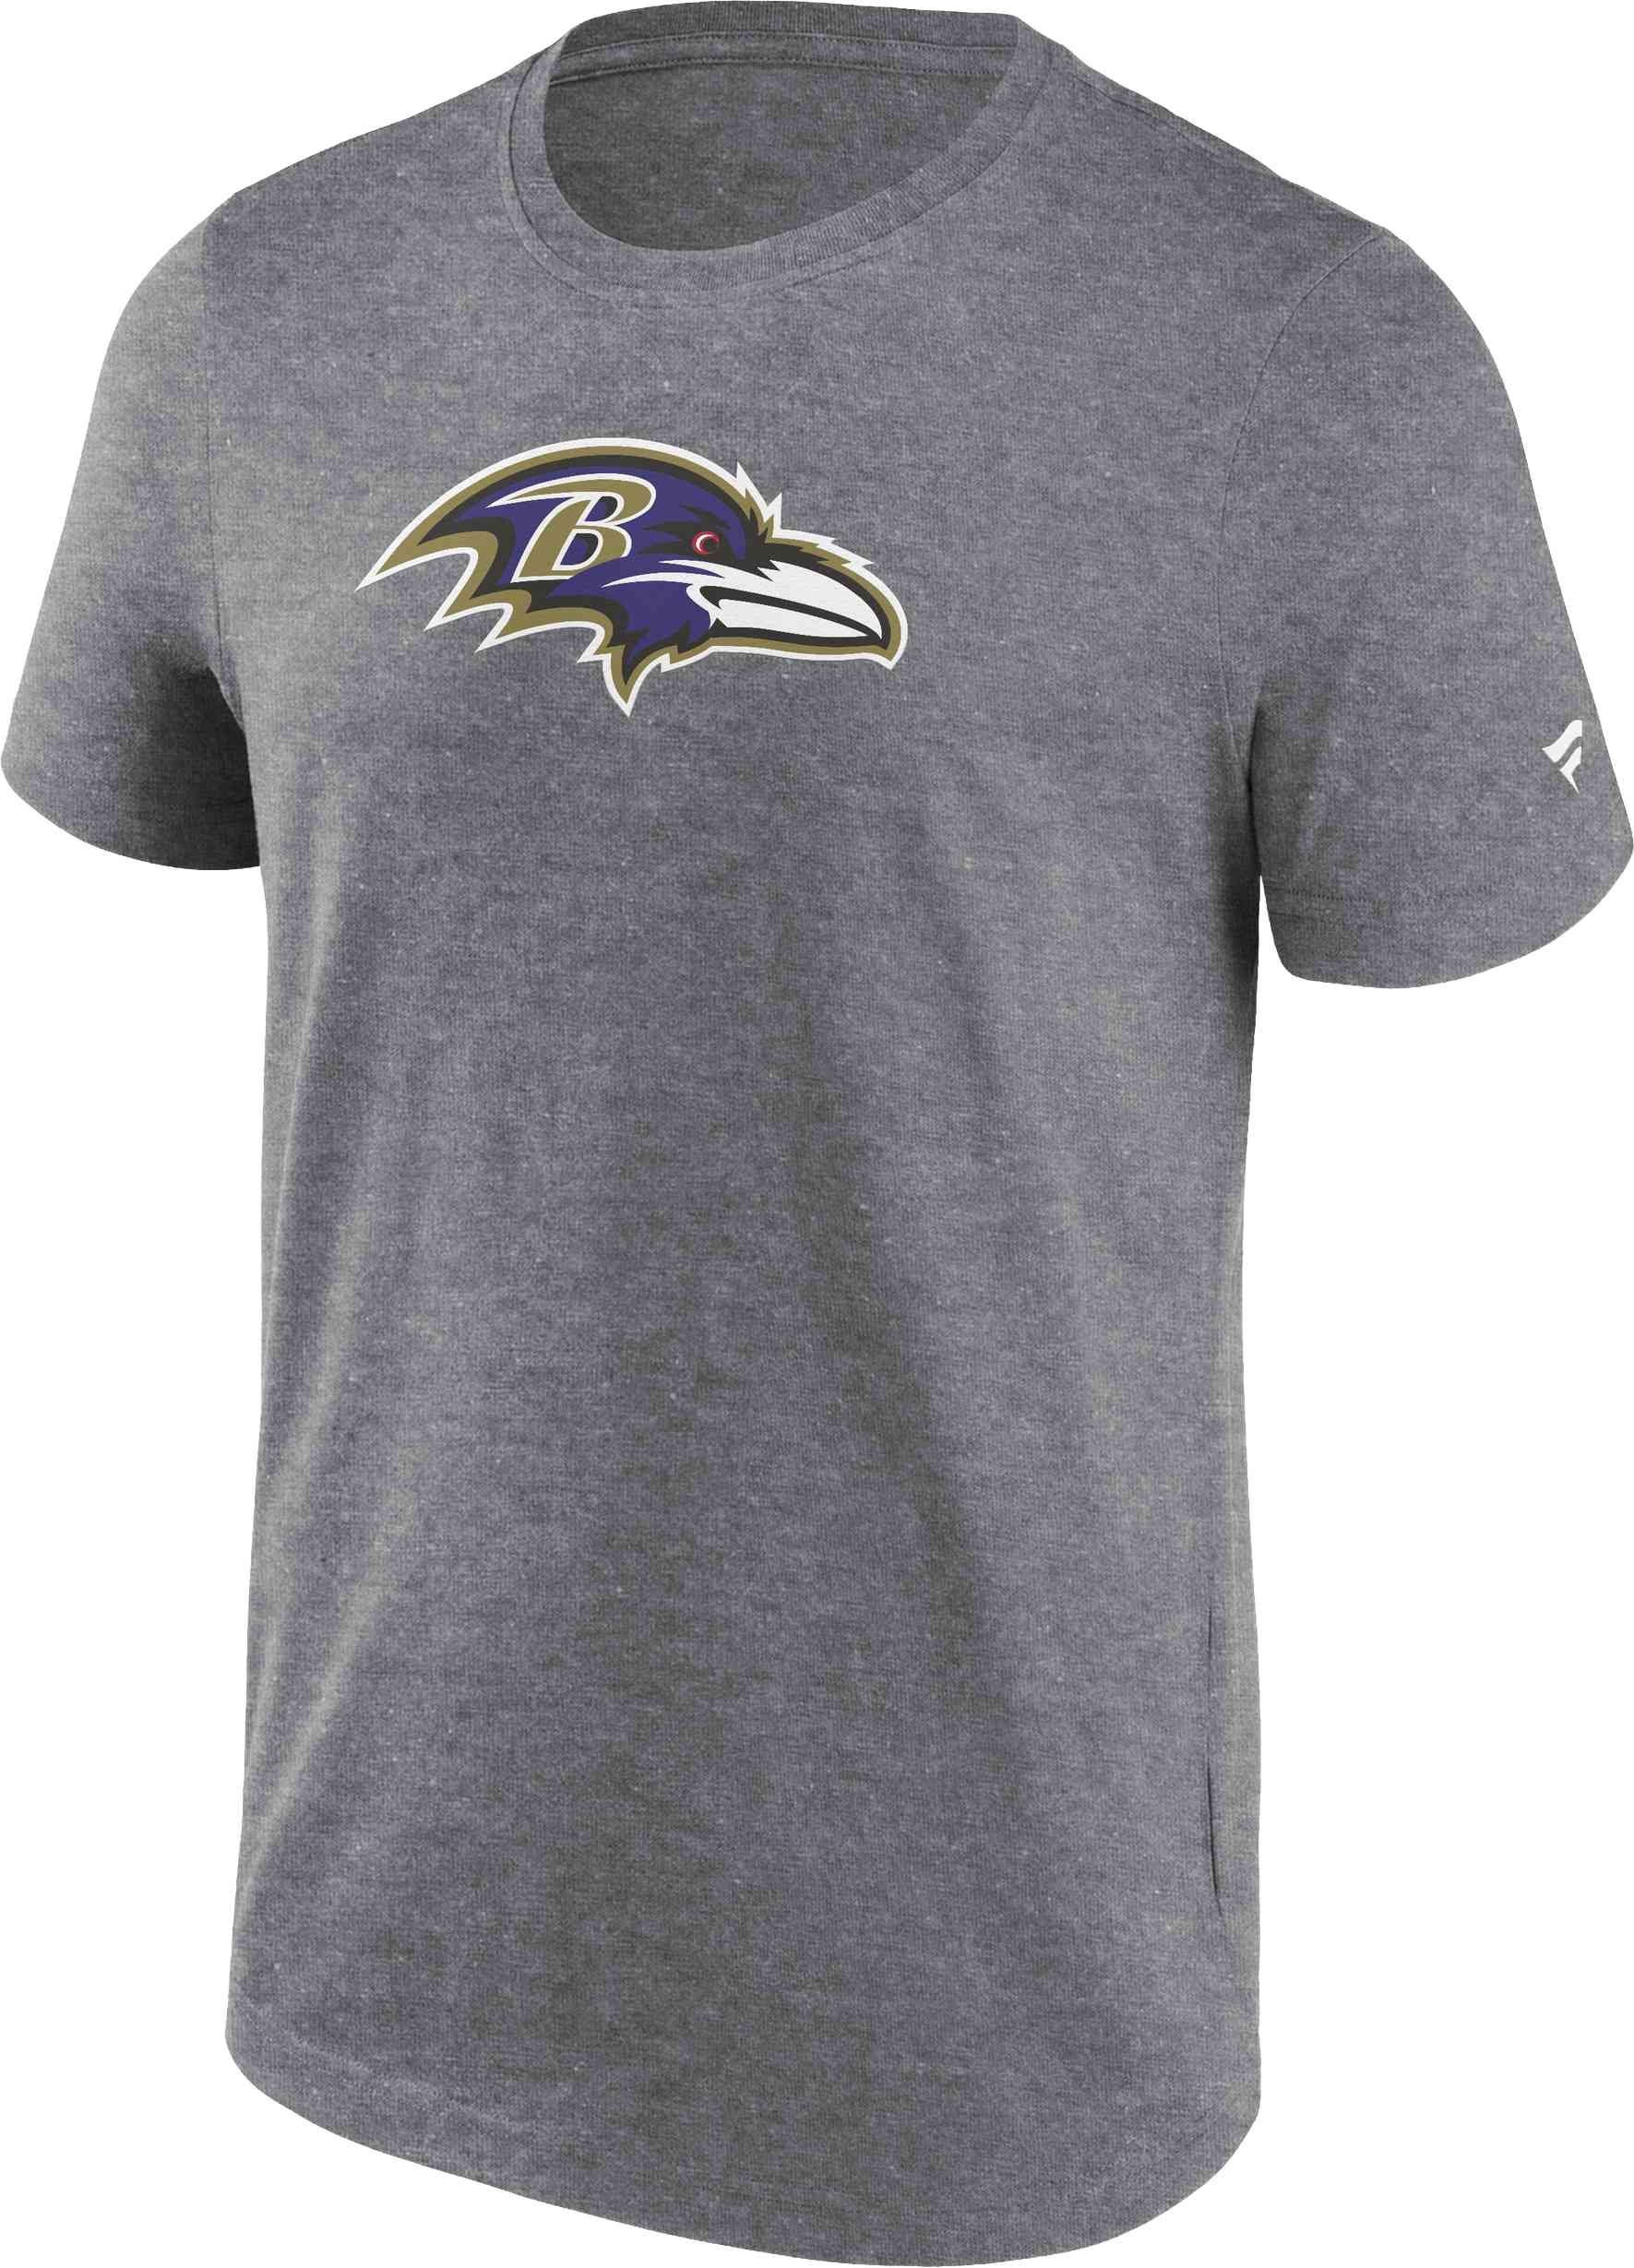 Fanatics T-Shirt NFL Baltimore Ravens Primary Logo Graphic